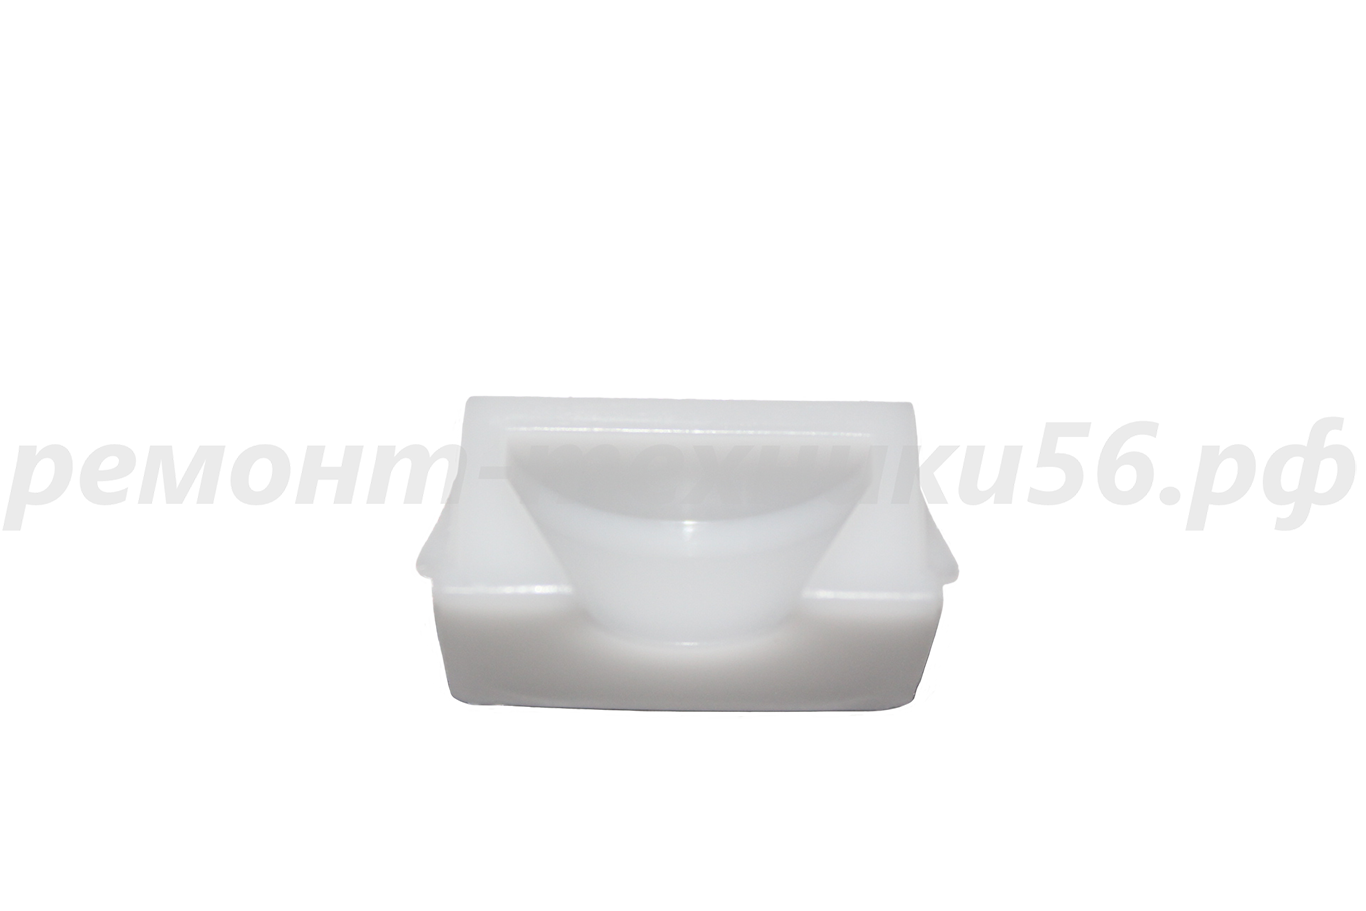 Подшипник скольжения передний Electrolux EHAW - 6515 (white) по лучшей цене фото3